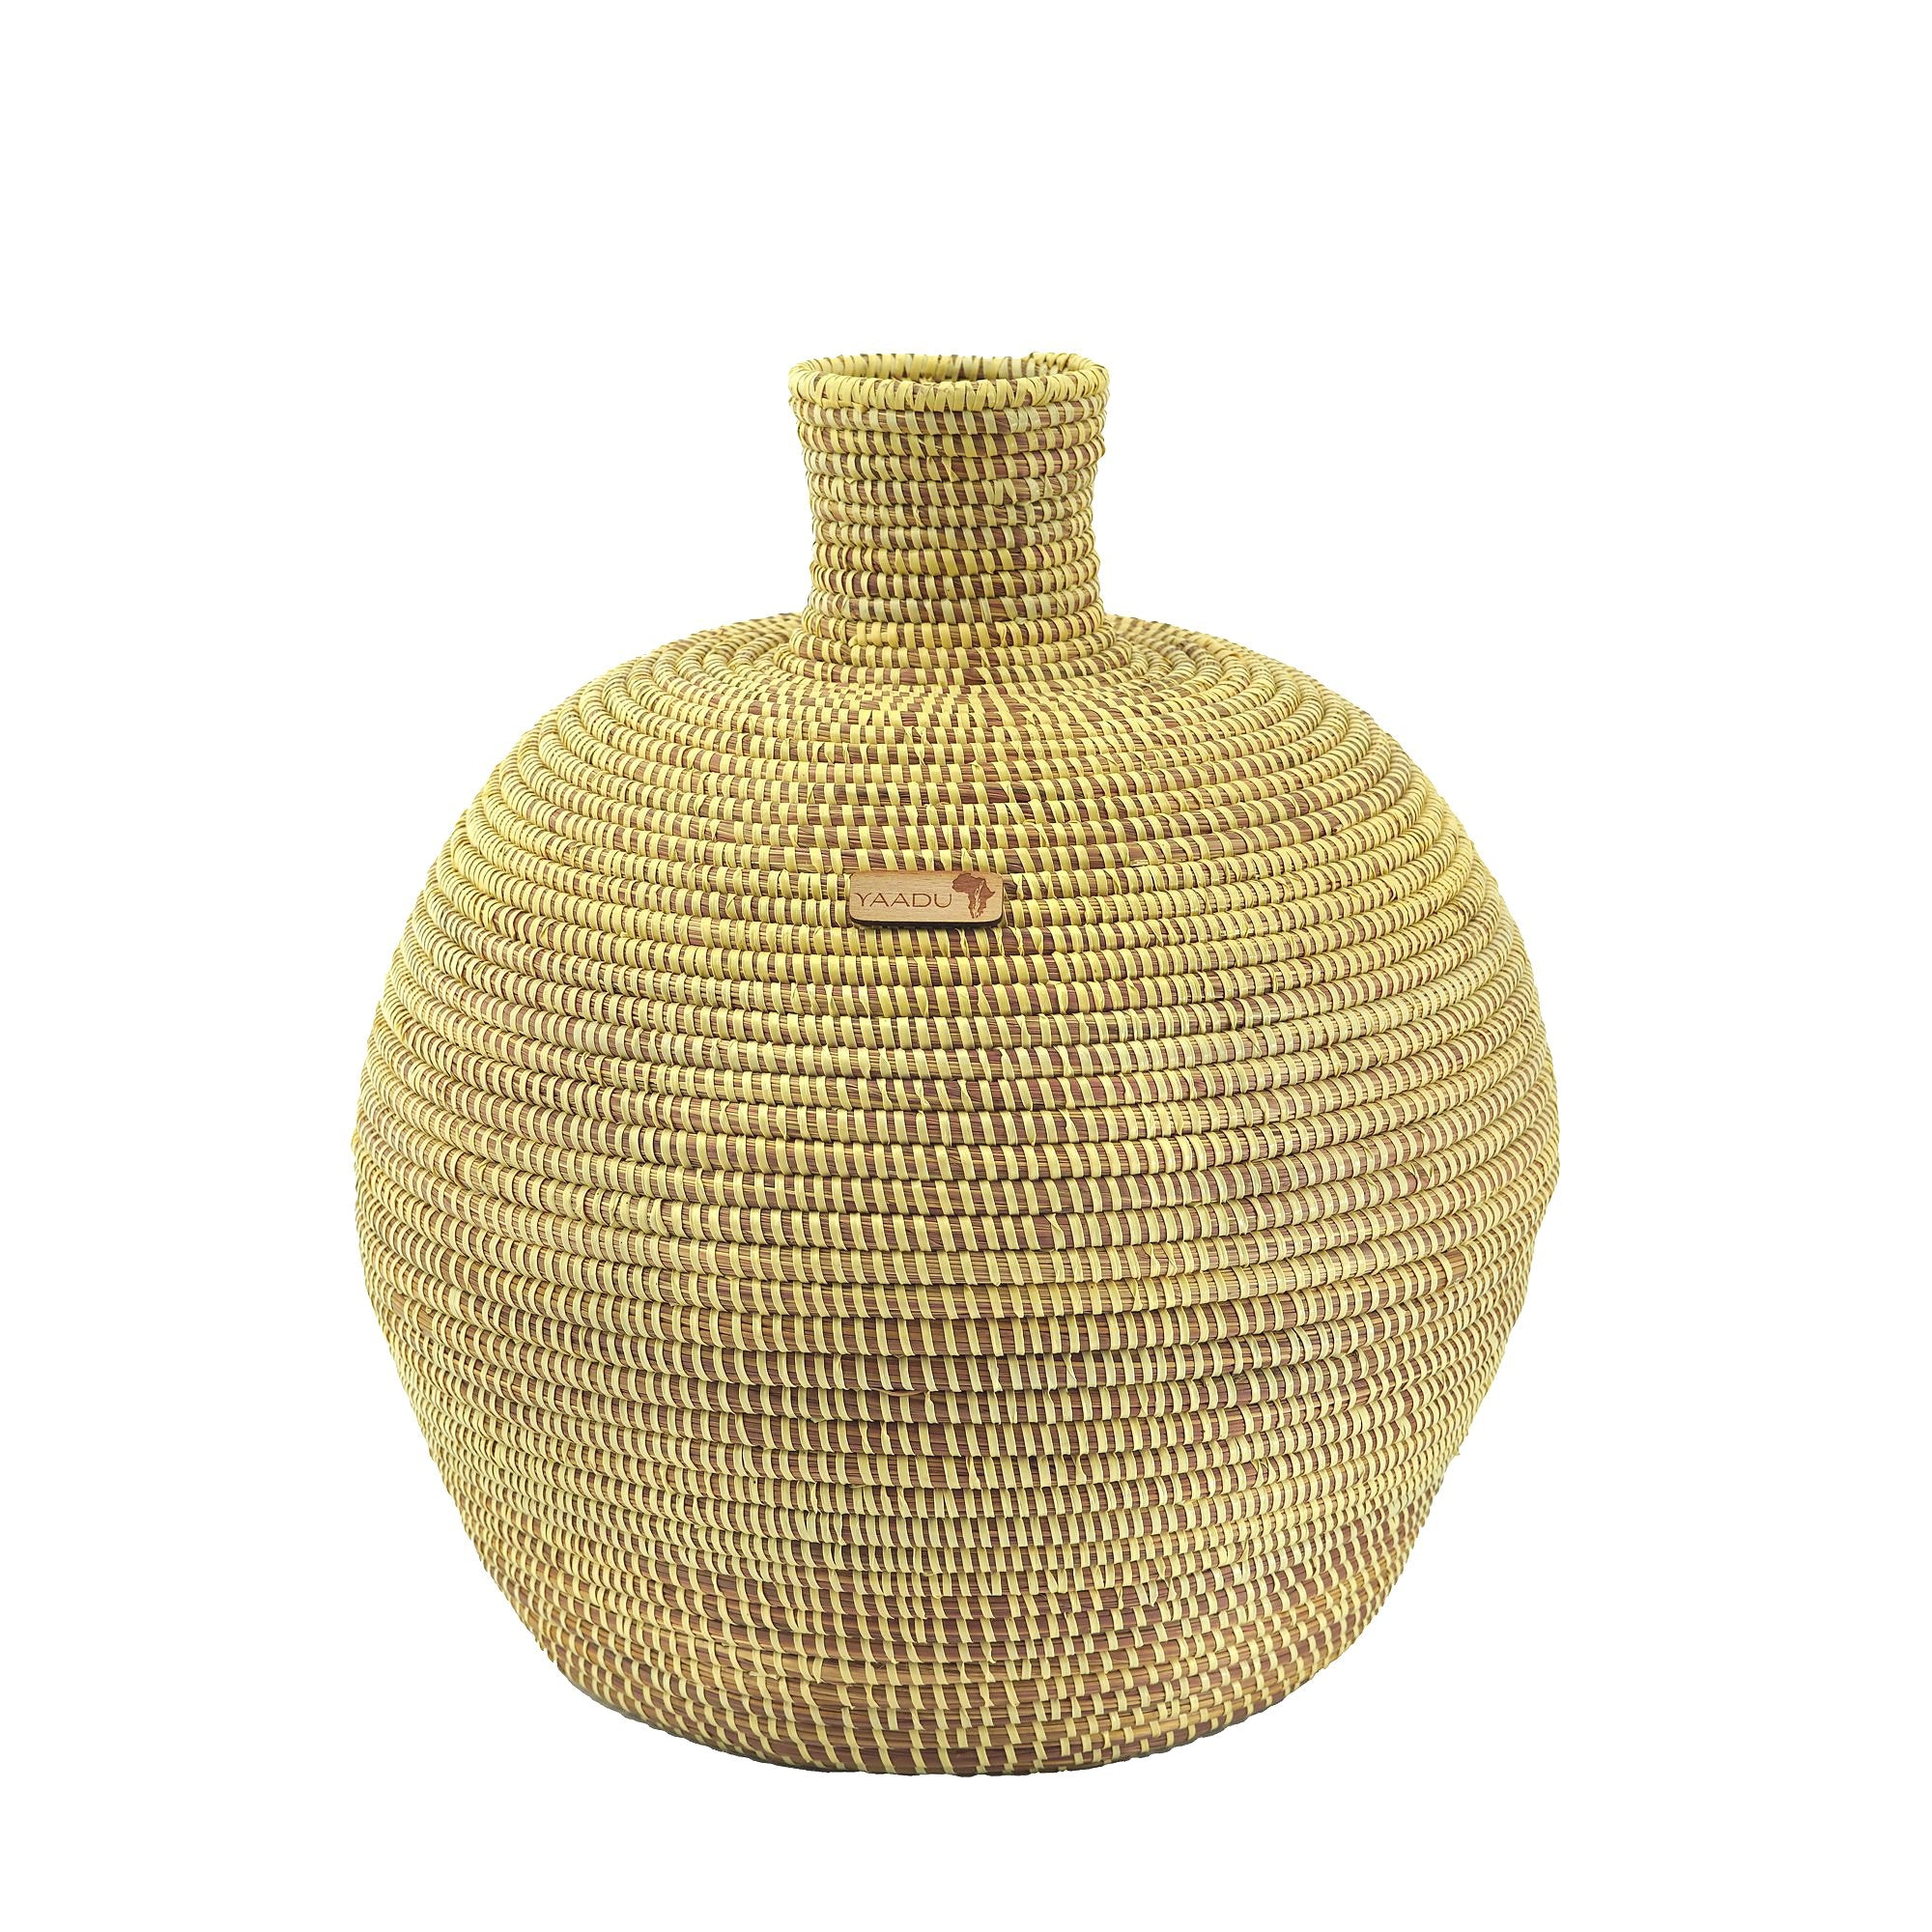 Grand vase panier africain – Zambèze